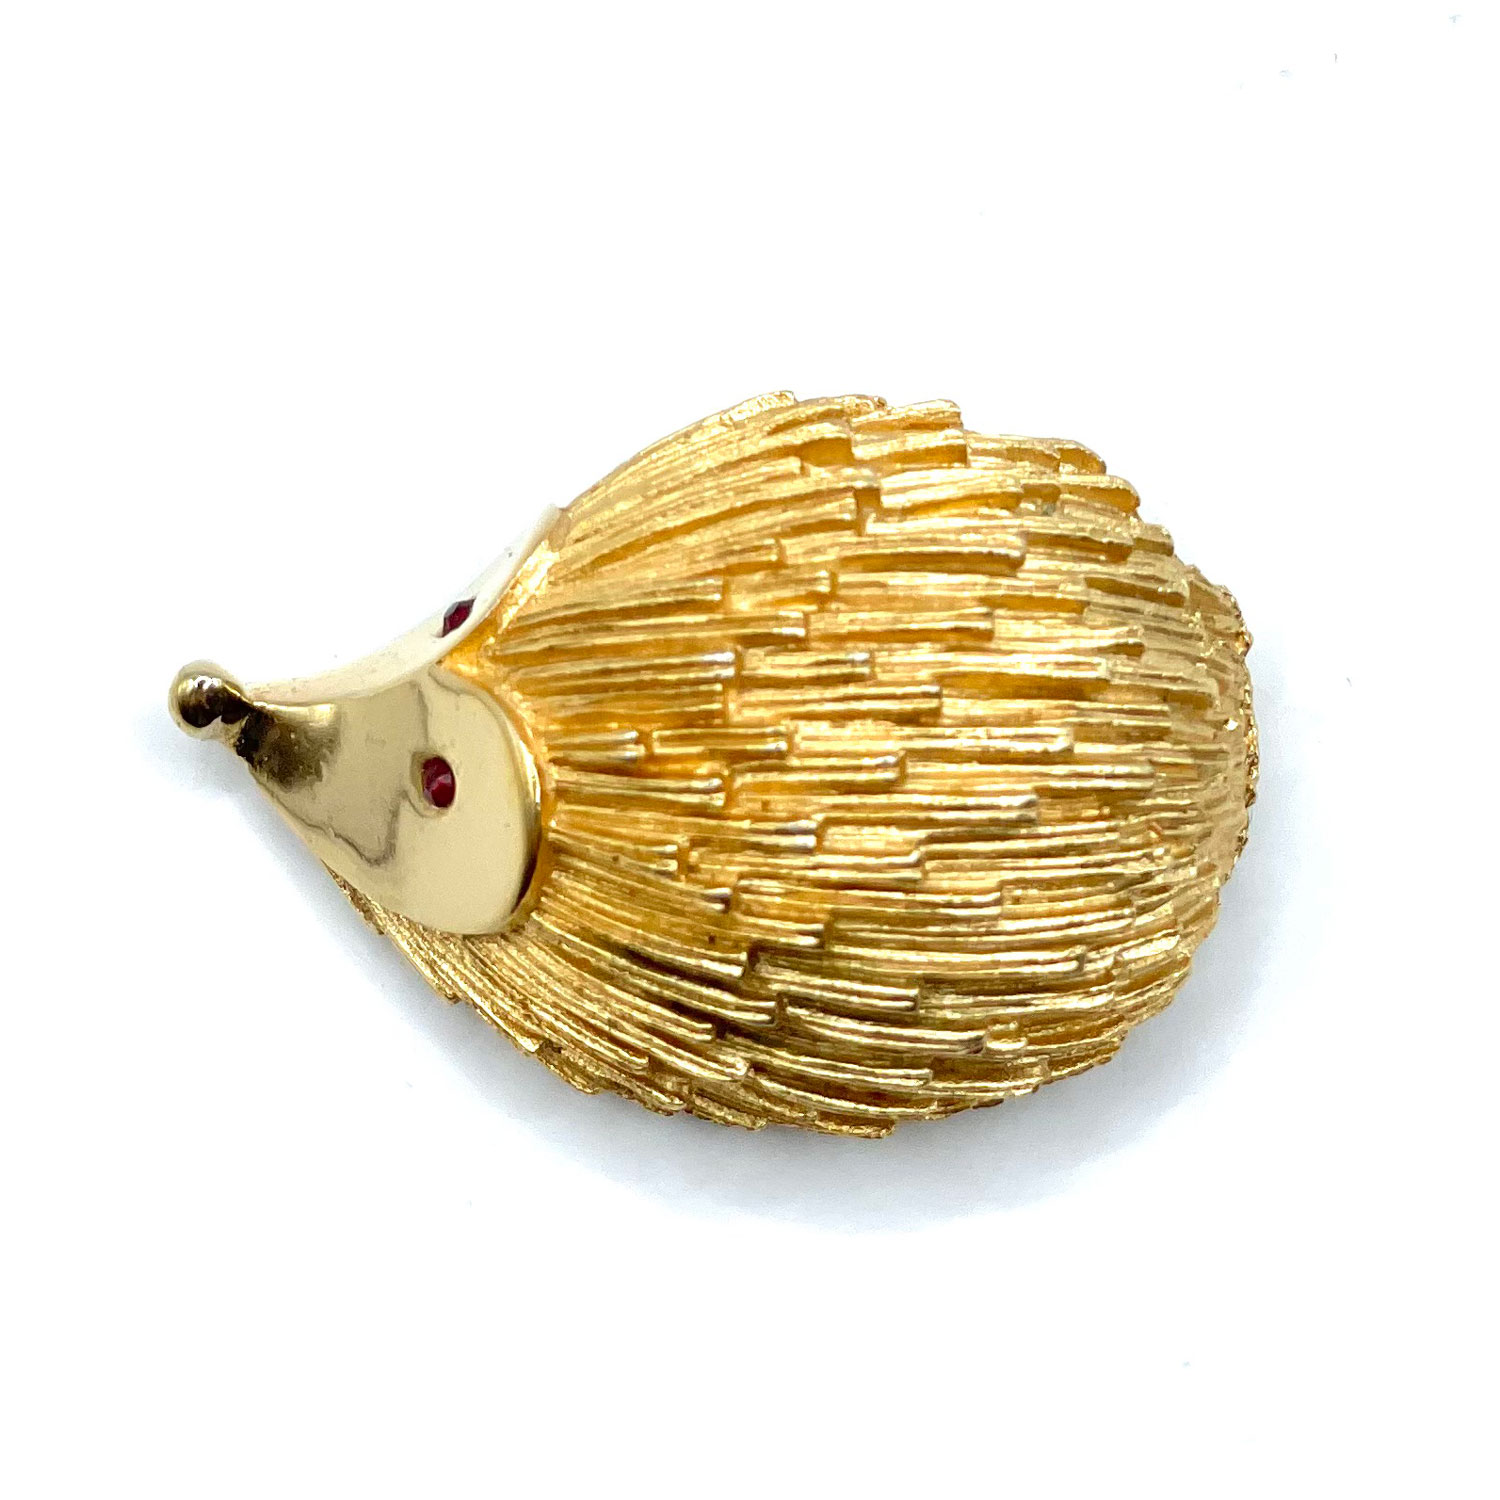 Hedgehog brooch by Sarah Coventry